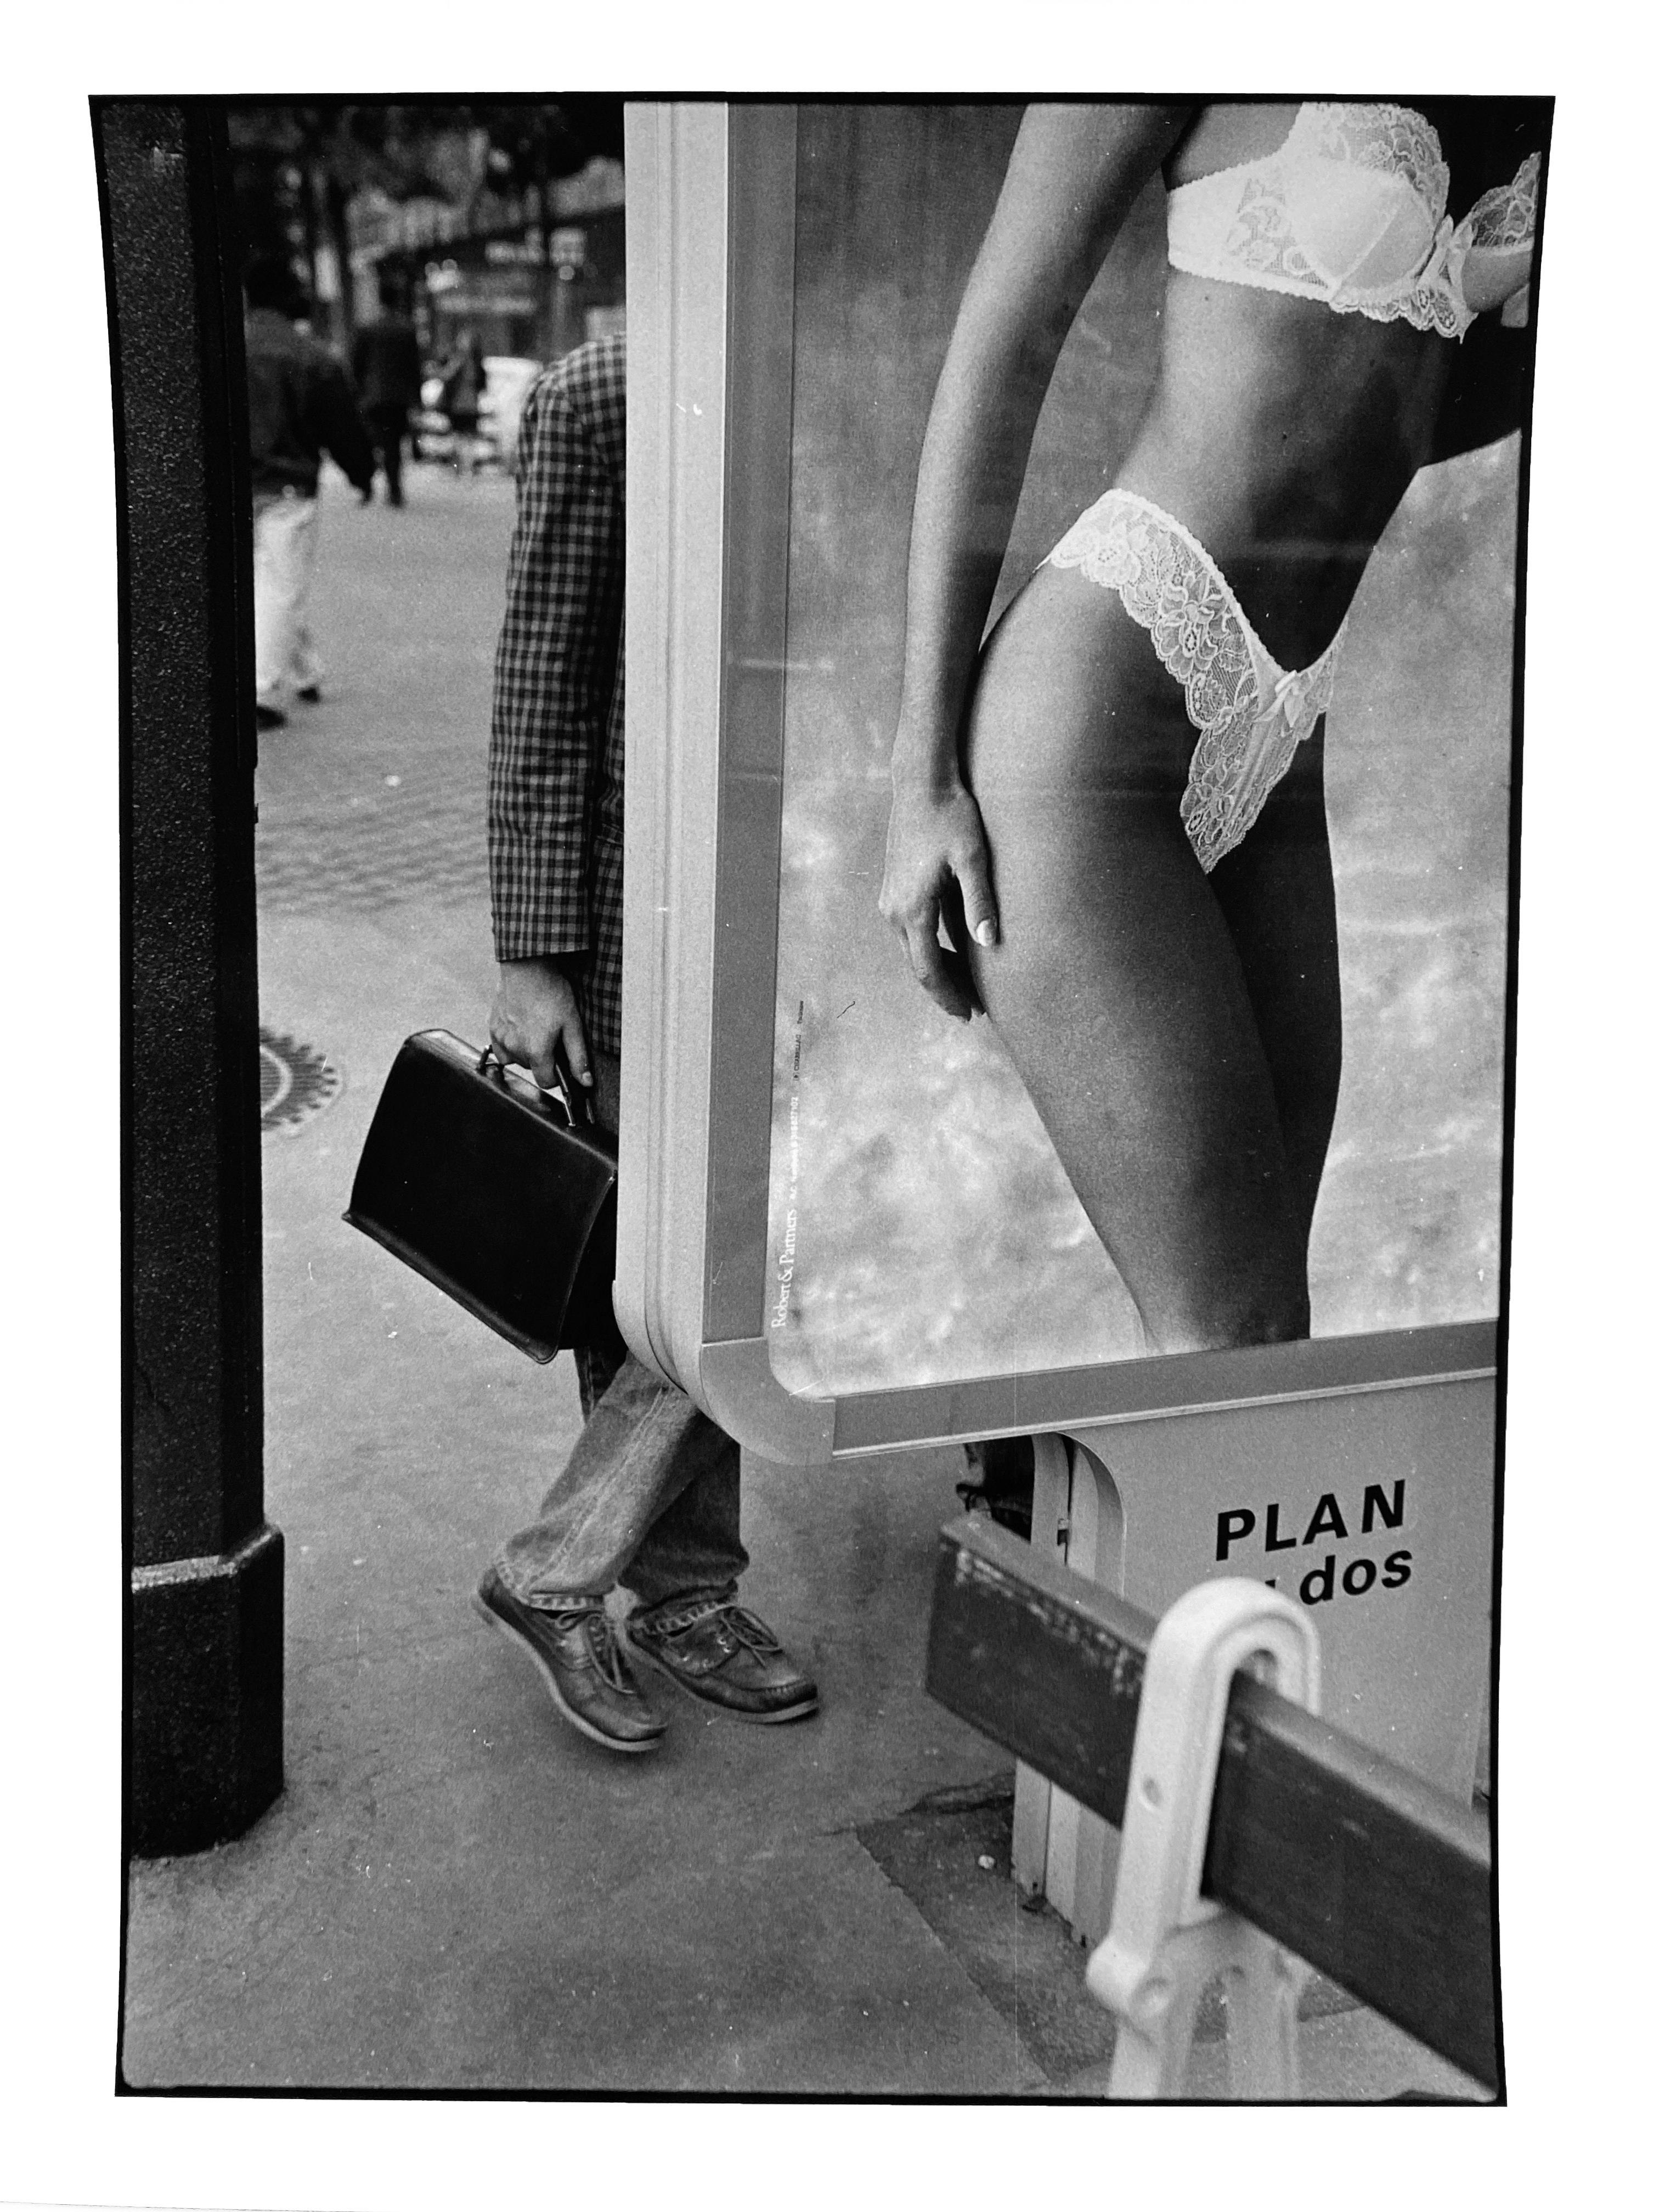 Leonard Freed Nude Photograph - Paris, France, Vintage Gelatin Silver Photograph 1990s French Street Scene